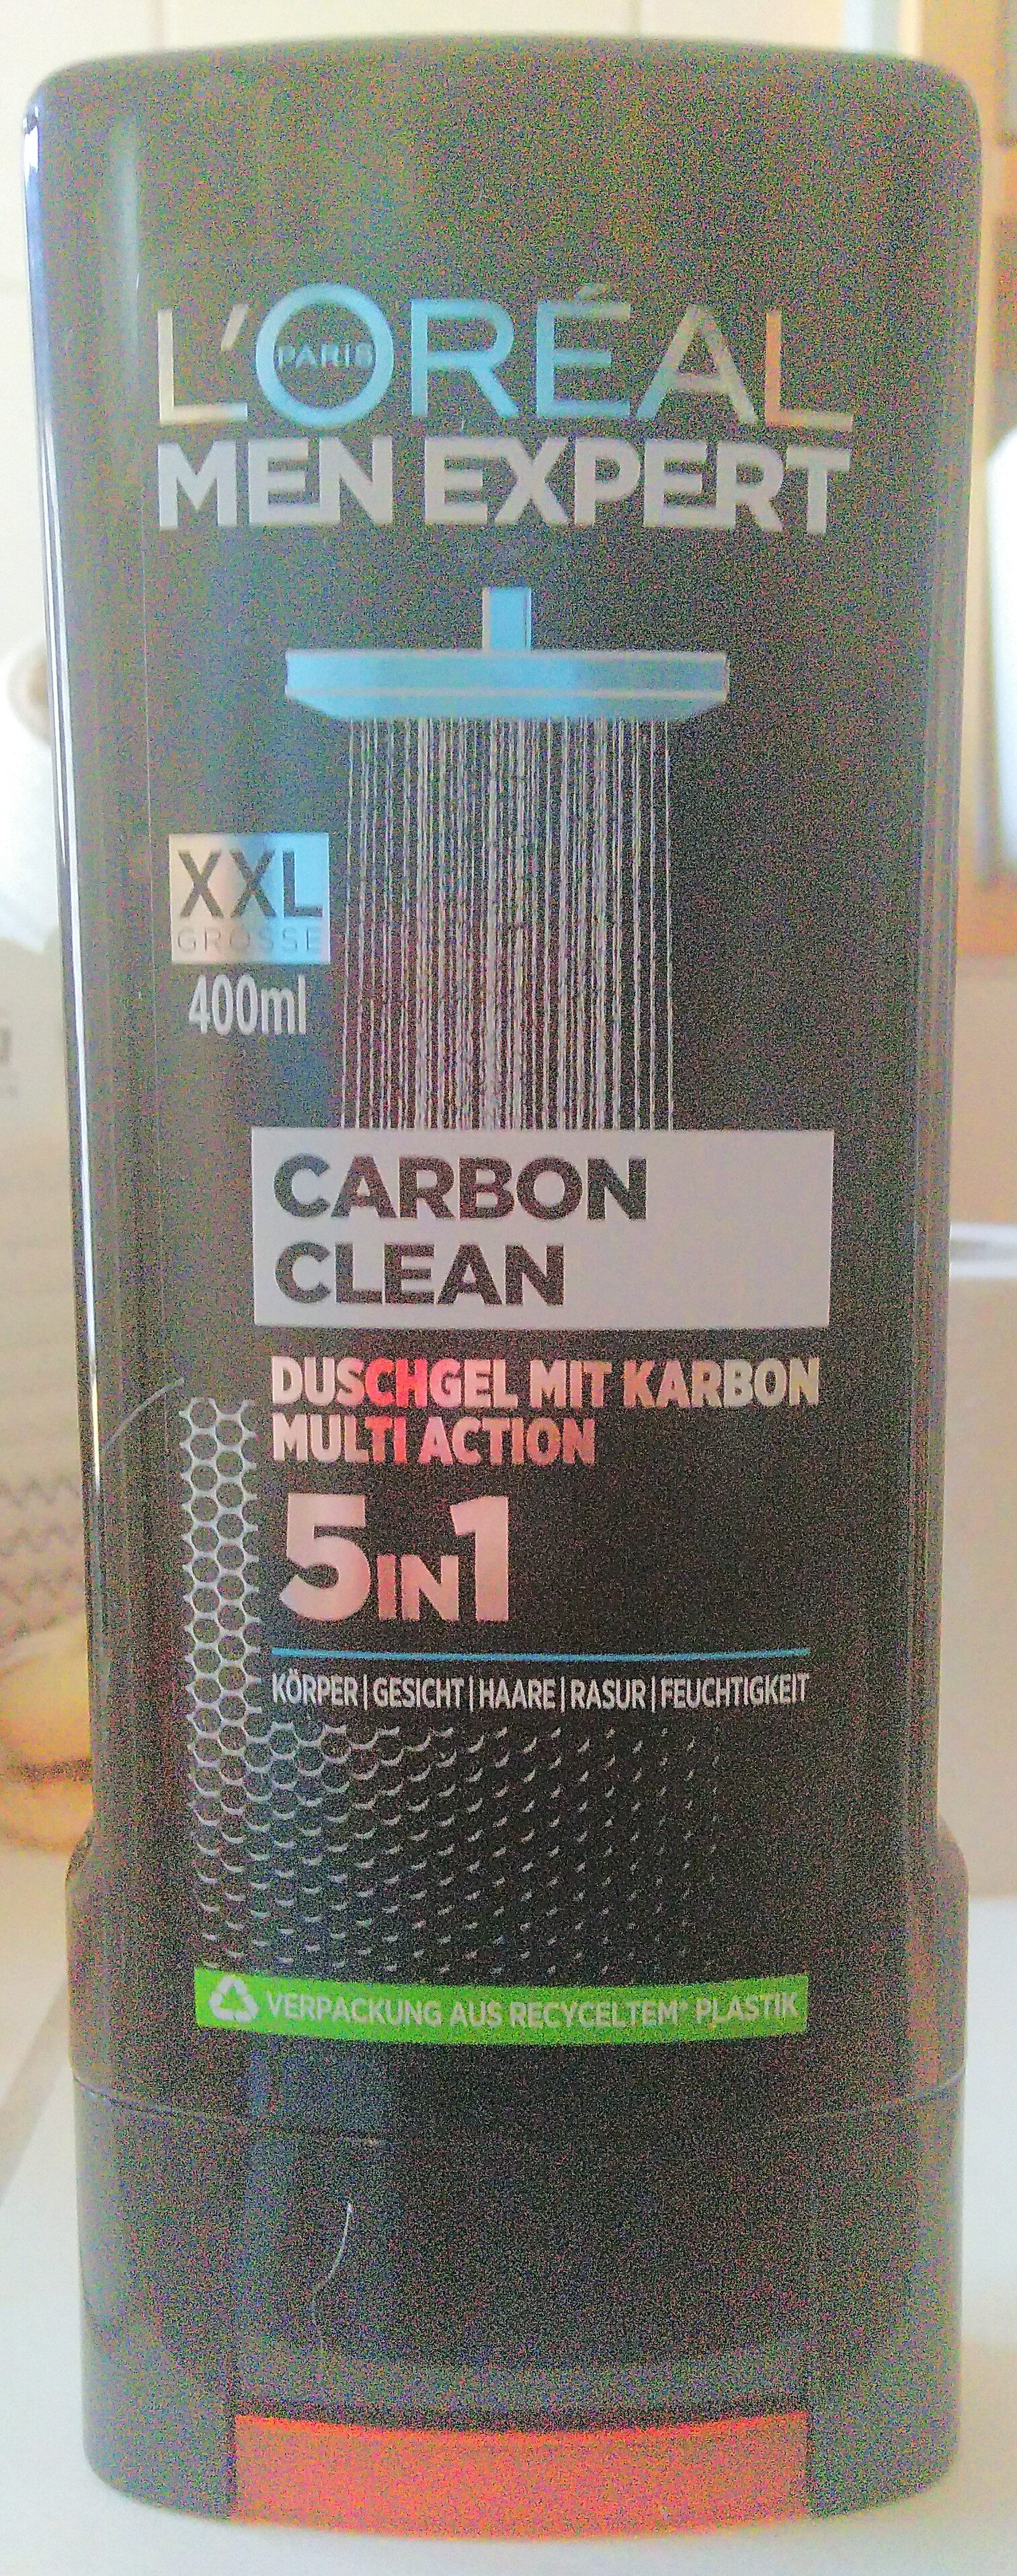 Men Expert Carbon Clean Duschgel 5in1 - Produto - de